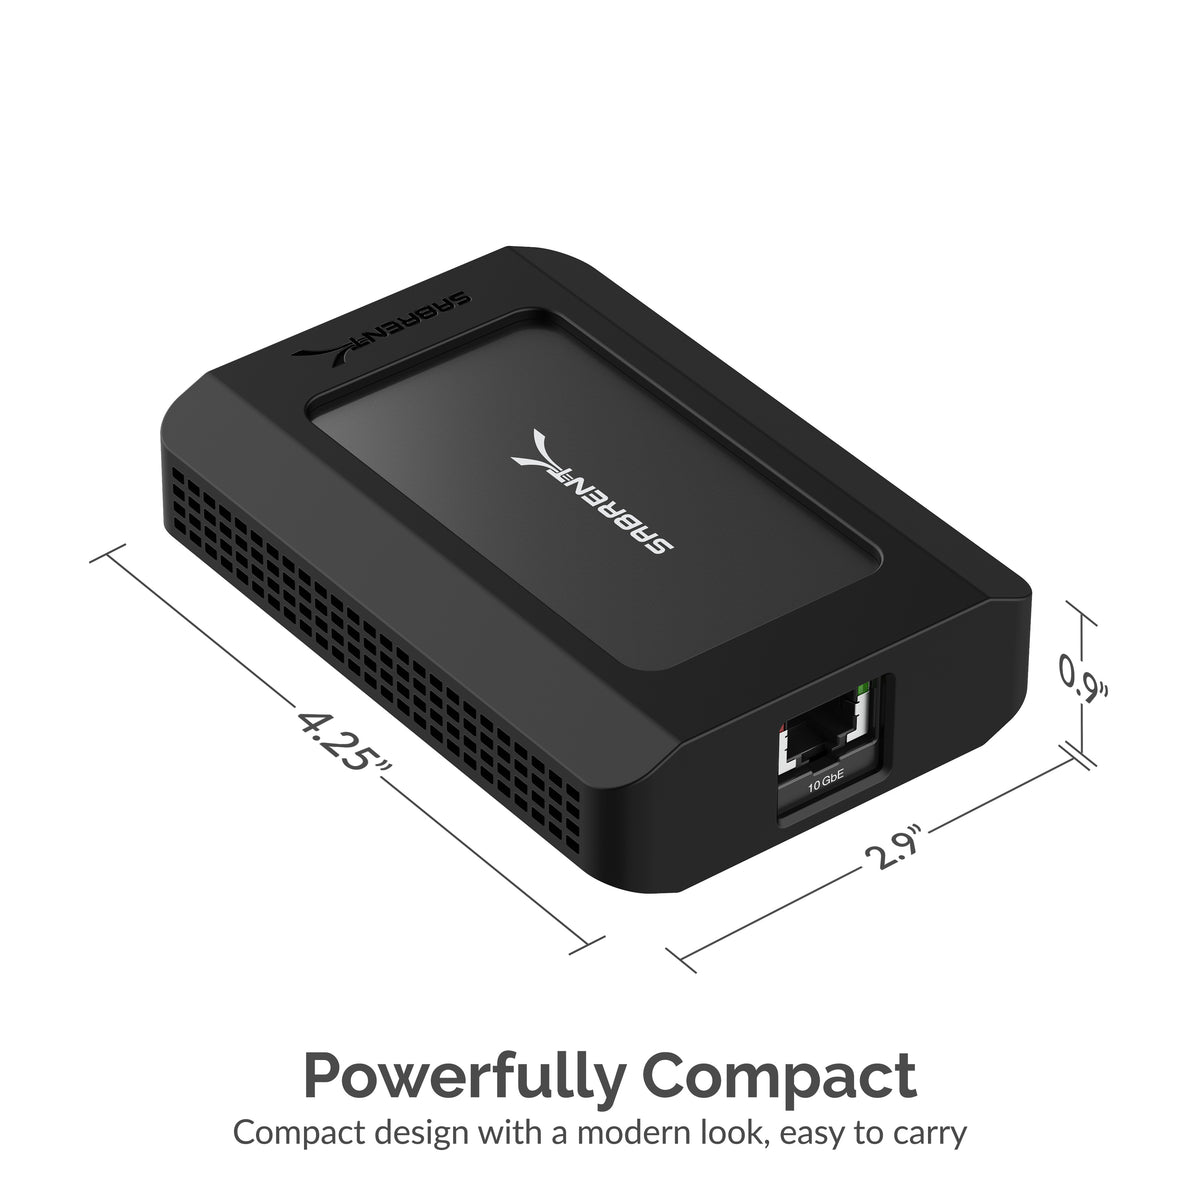 Thunderbolt™ 3 Ethernet Adapter